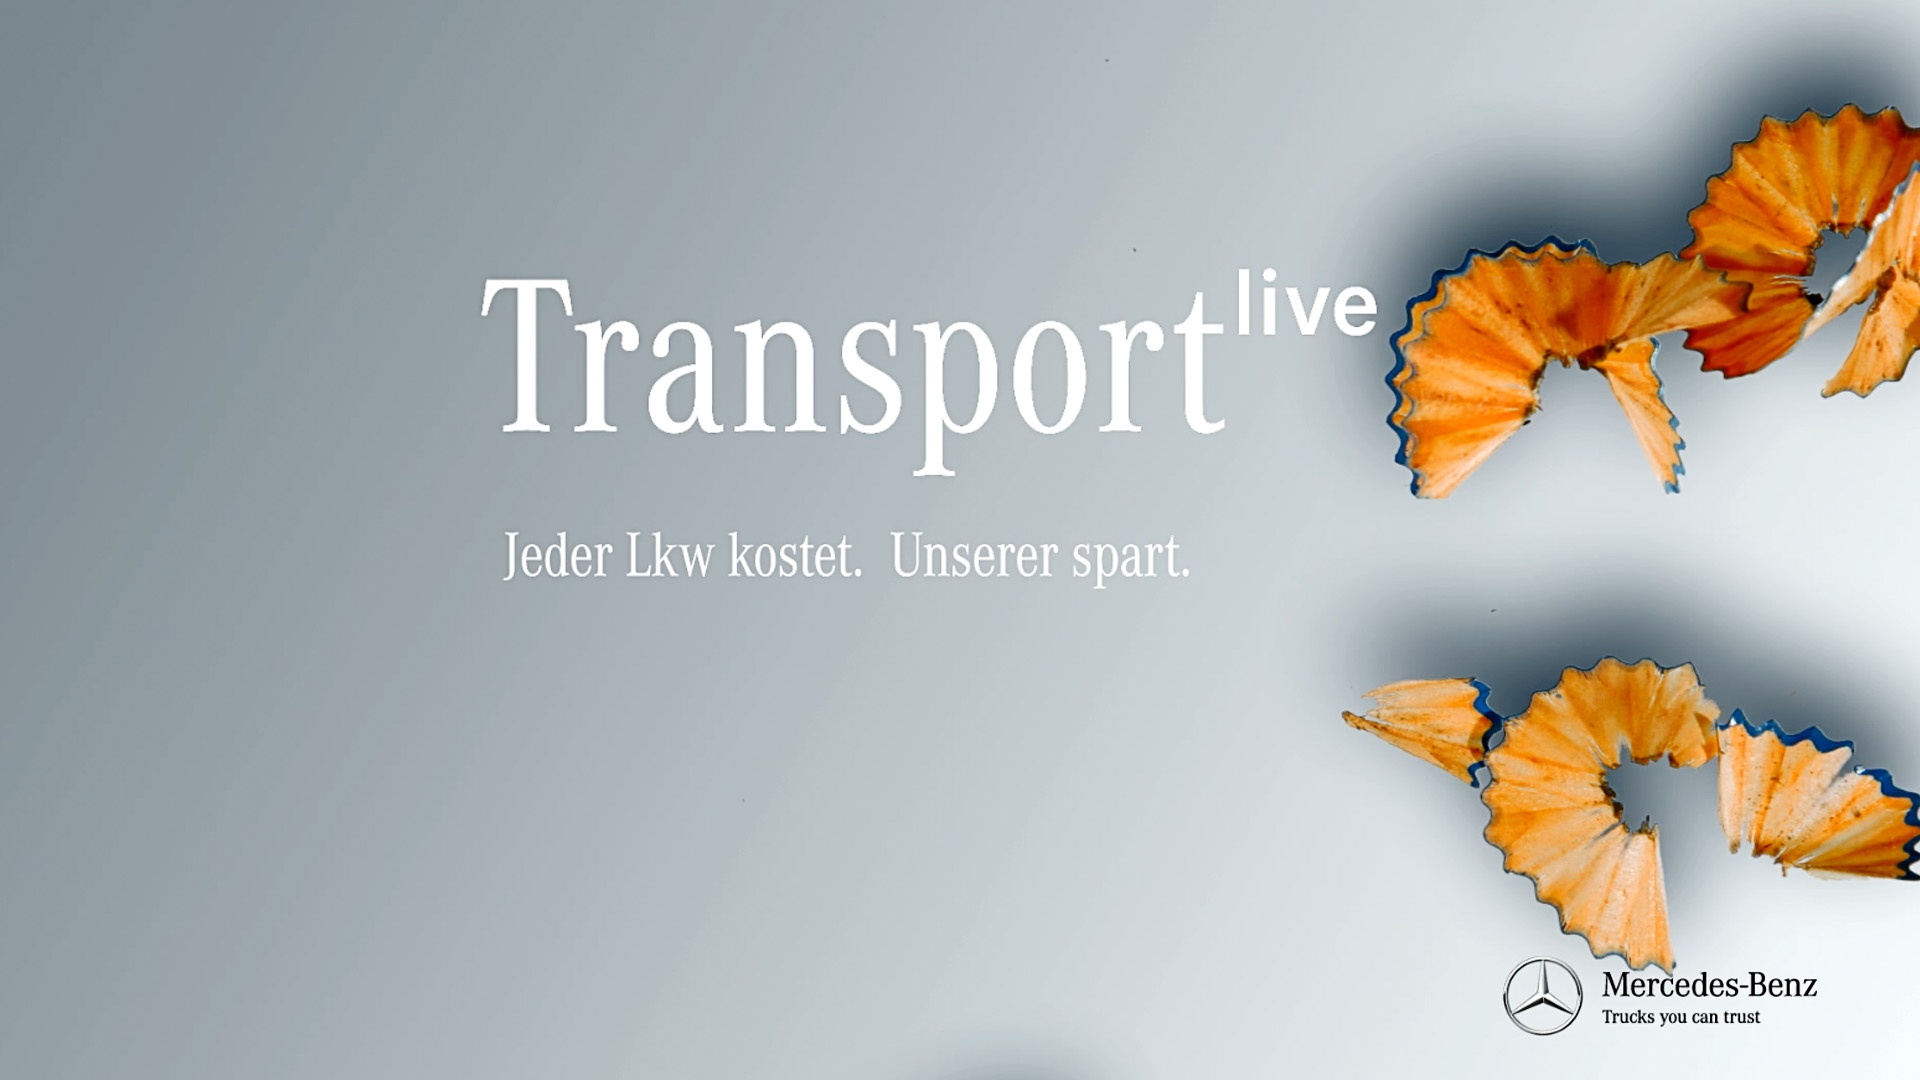 Daimler Infotainment Magazin Transport Live